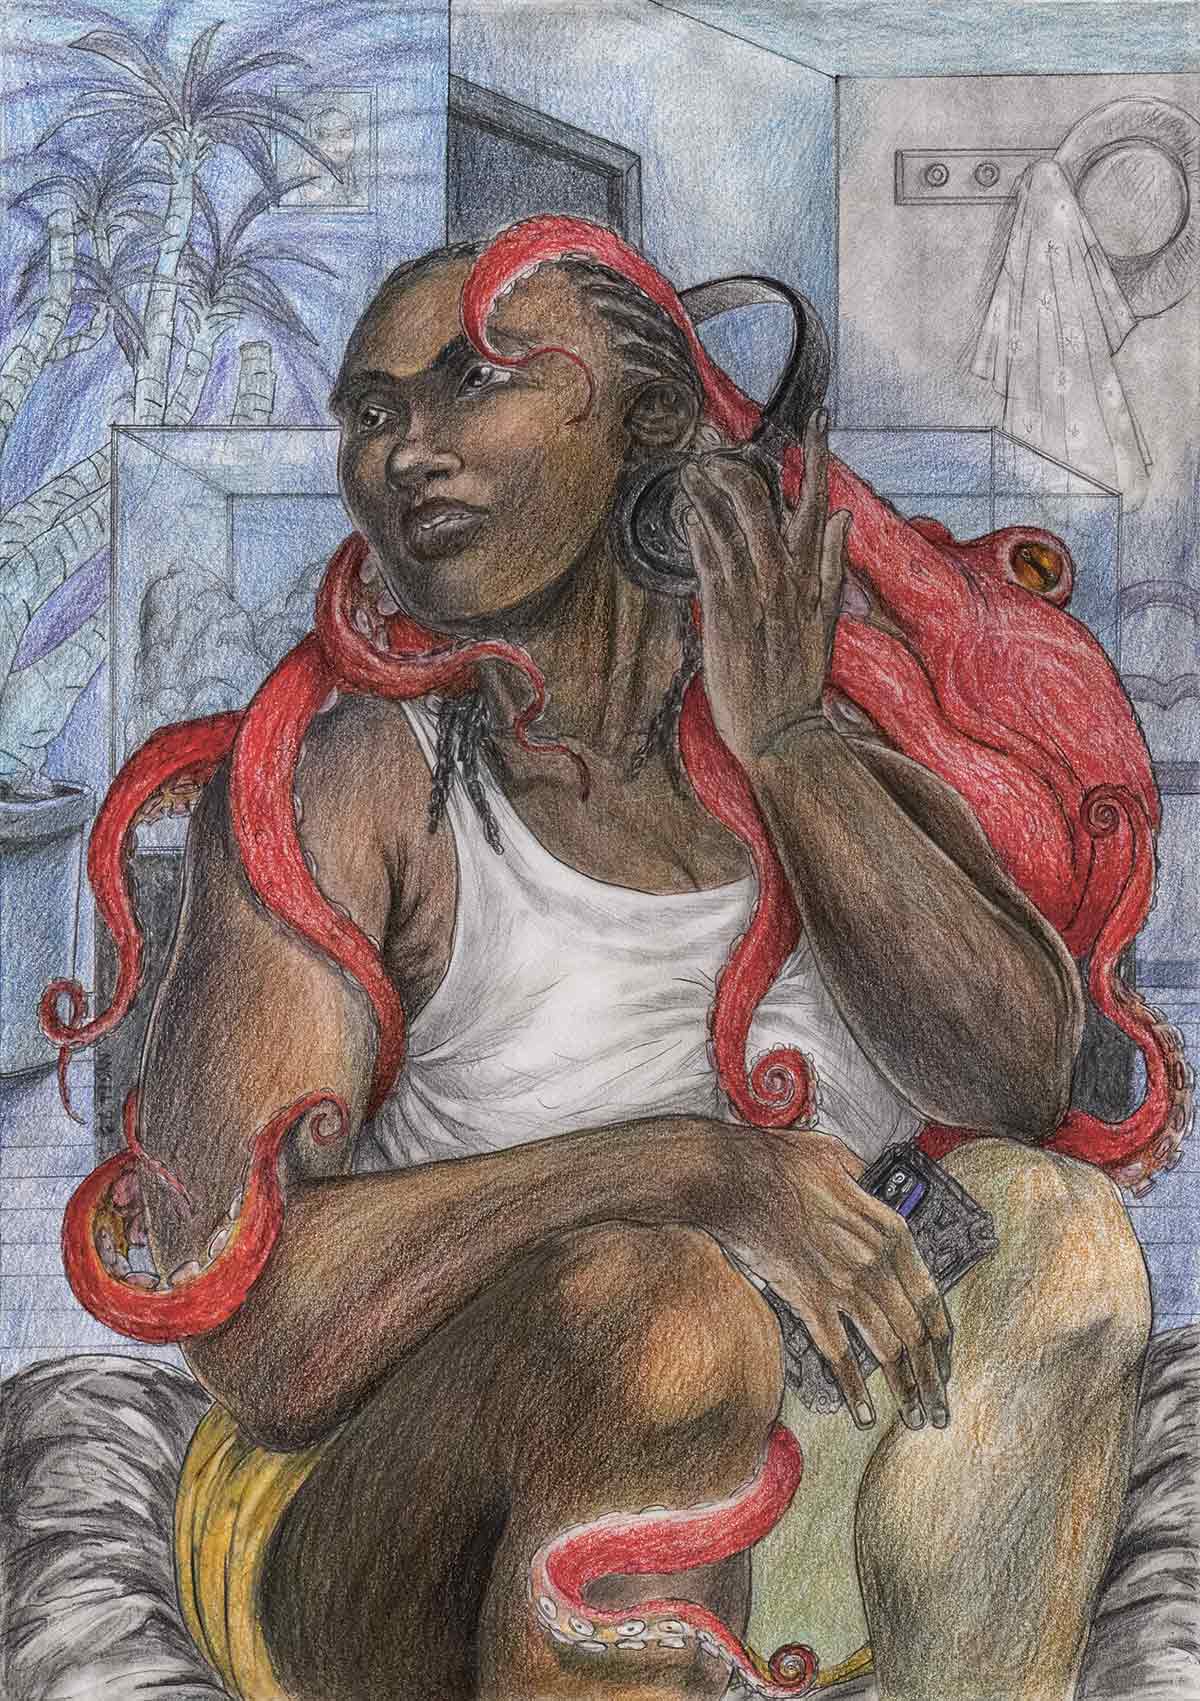 Illustration de Nygel Panasco pour la fiction « Thug & moi » signée Seynabou Sonko - La Déferlante 12